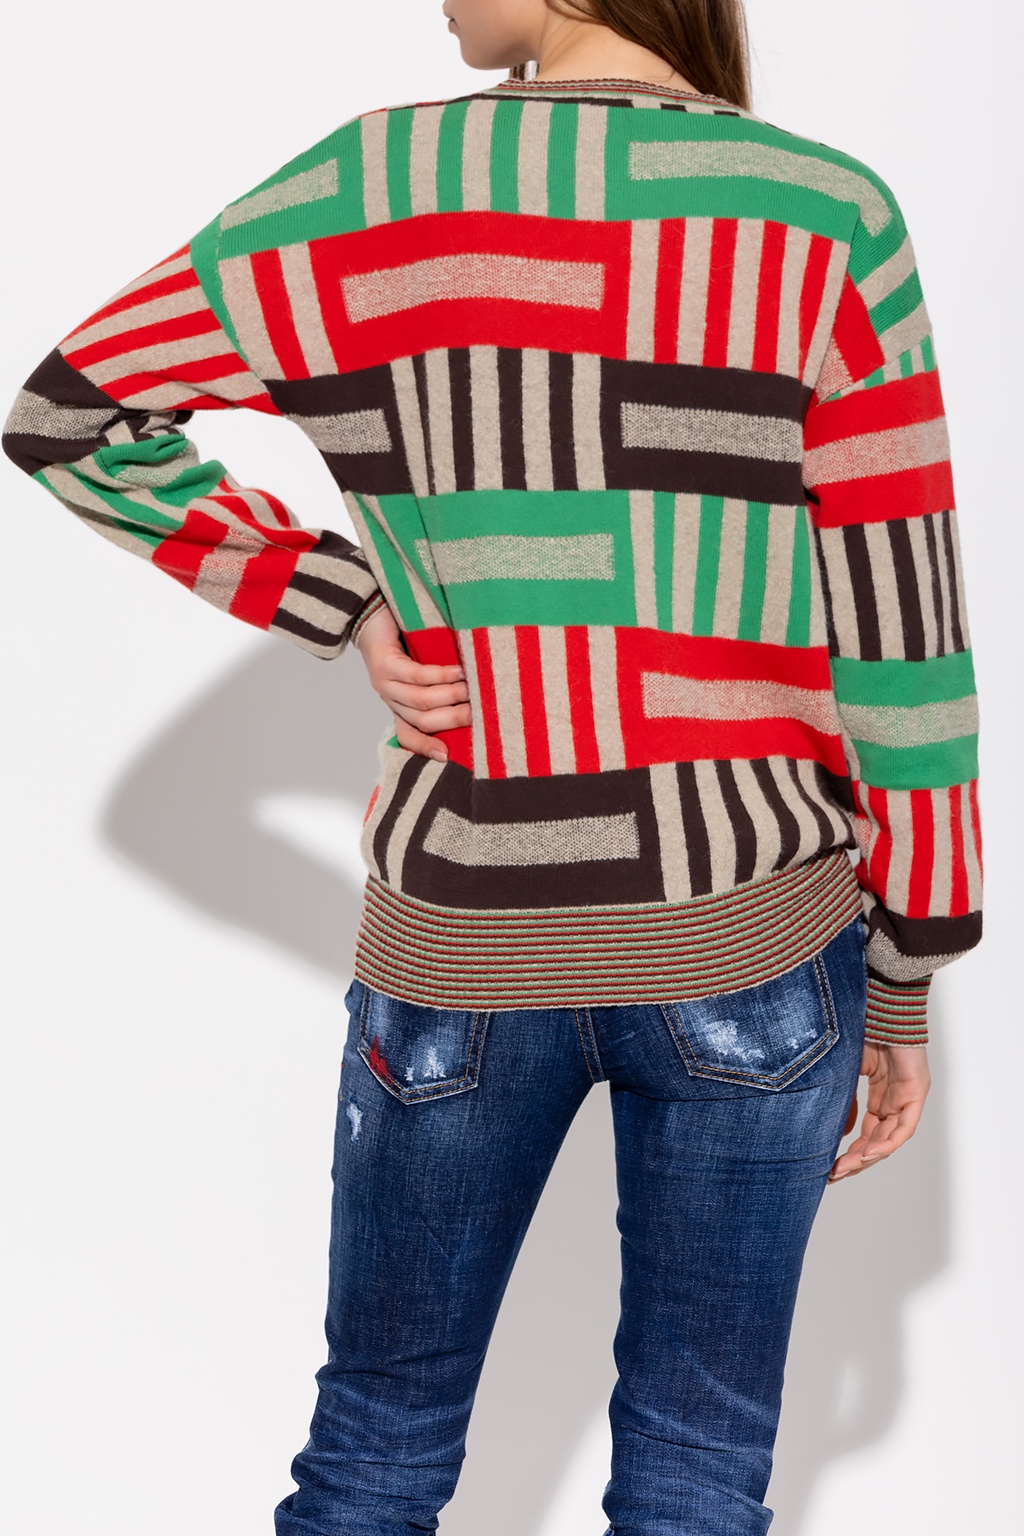 Vivienne Westwood Patterned sweater